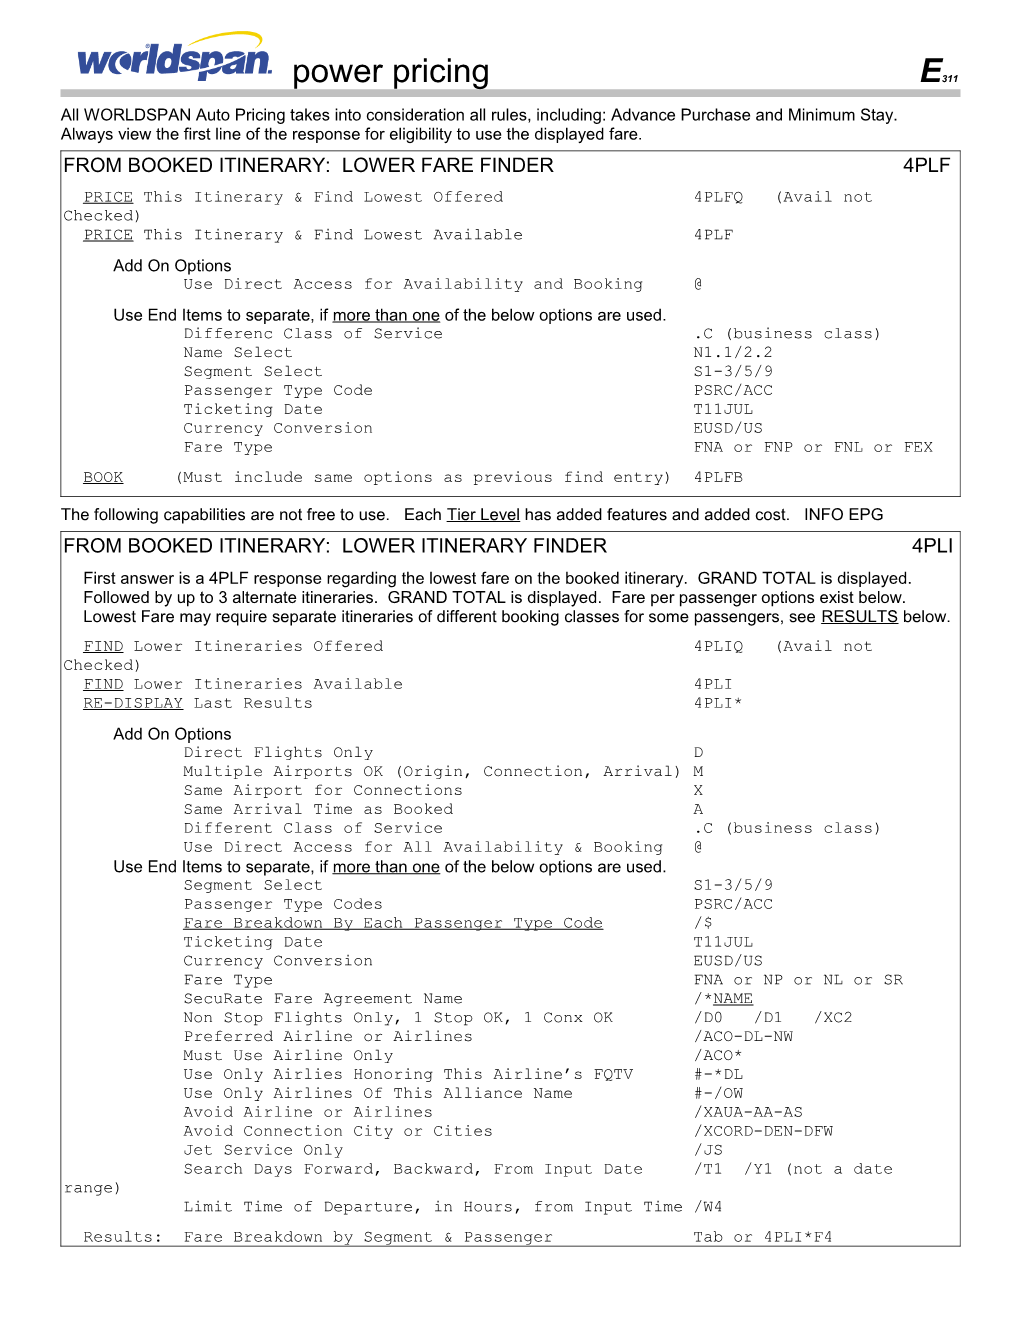 Document Log Format Guide